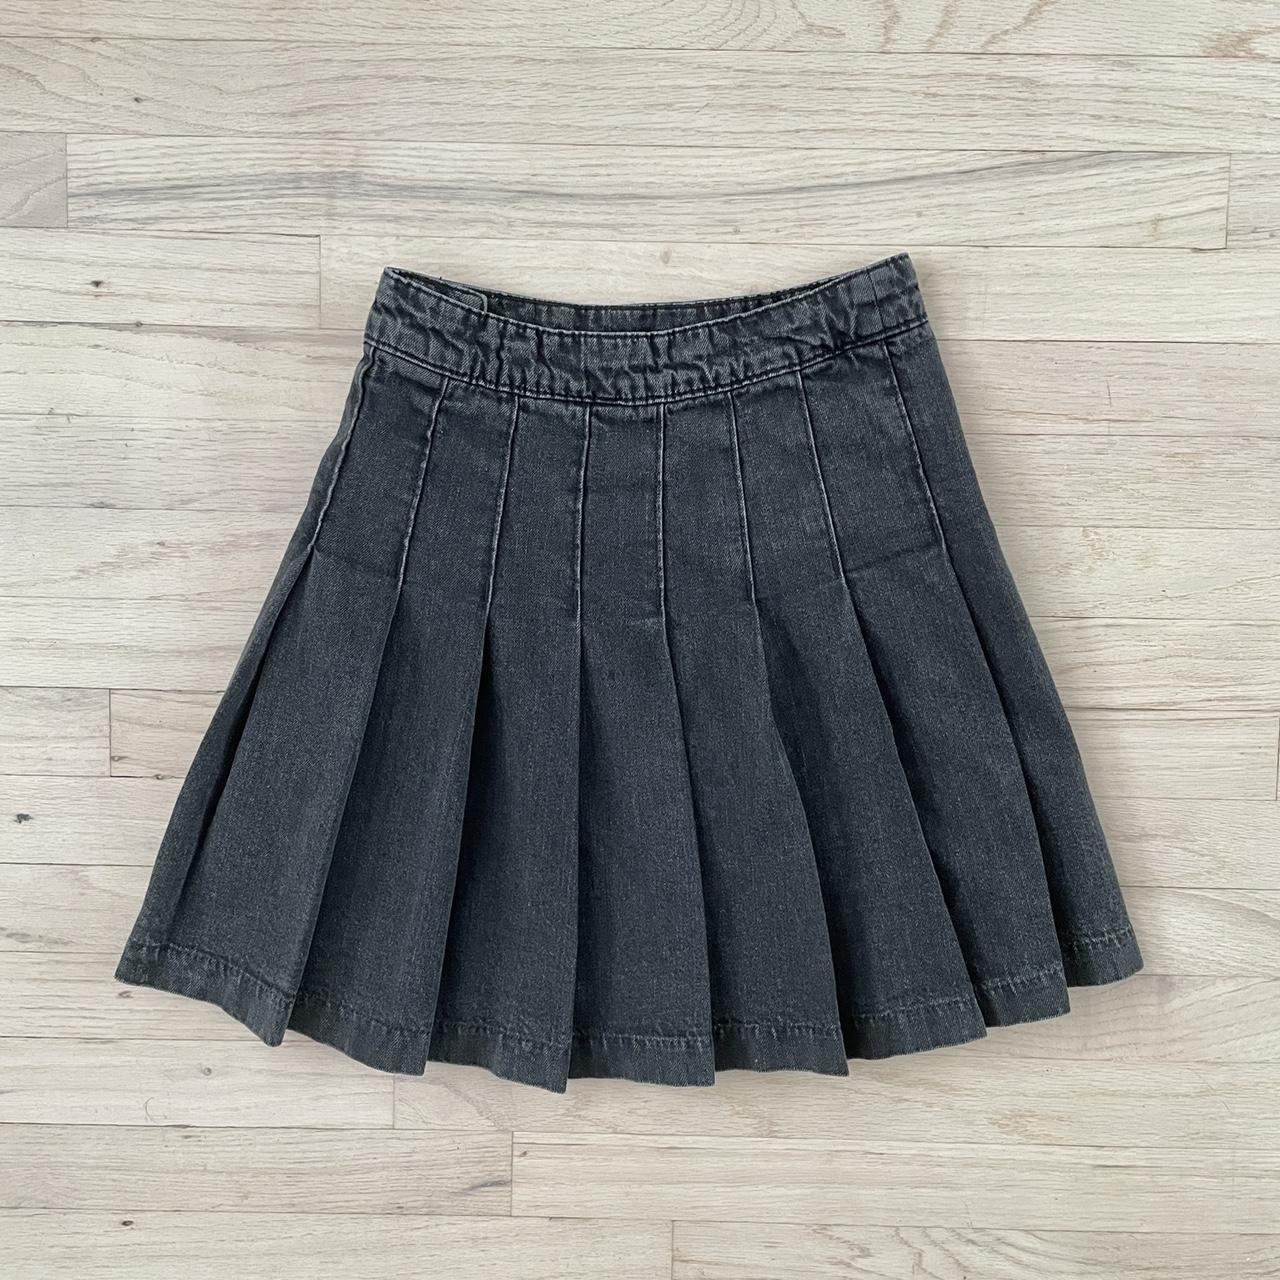 Dark Grey Denim Pleated Mini Skirt H&M Divided 100%... - Depop